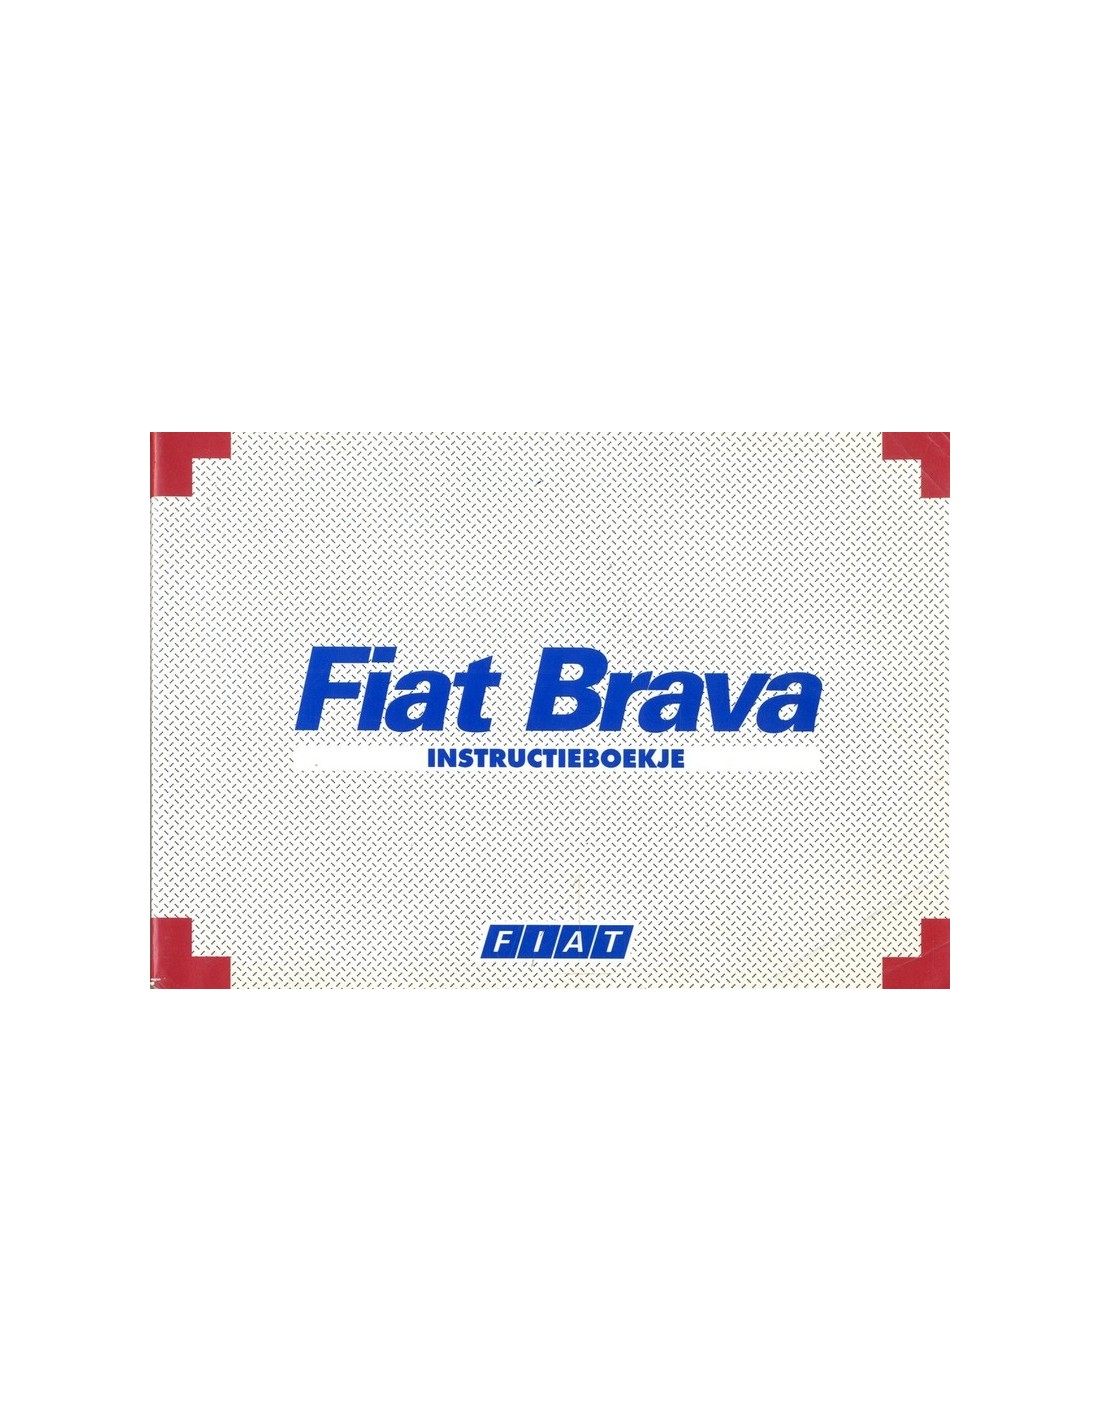 1997 FIAT BRAVA OWNER'S MANUAL HANDBOOK DUTCH